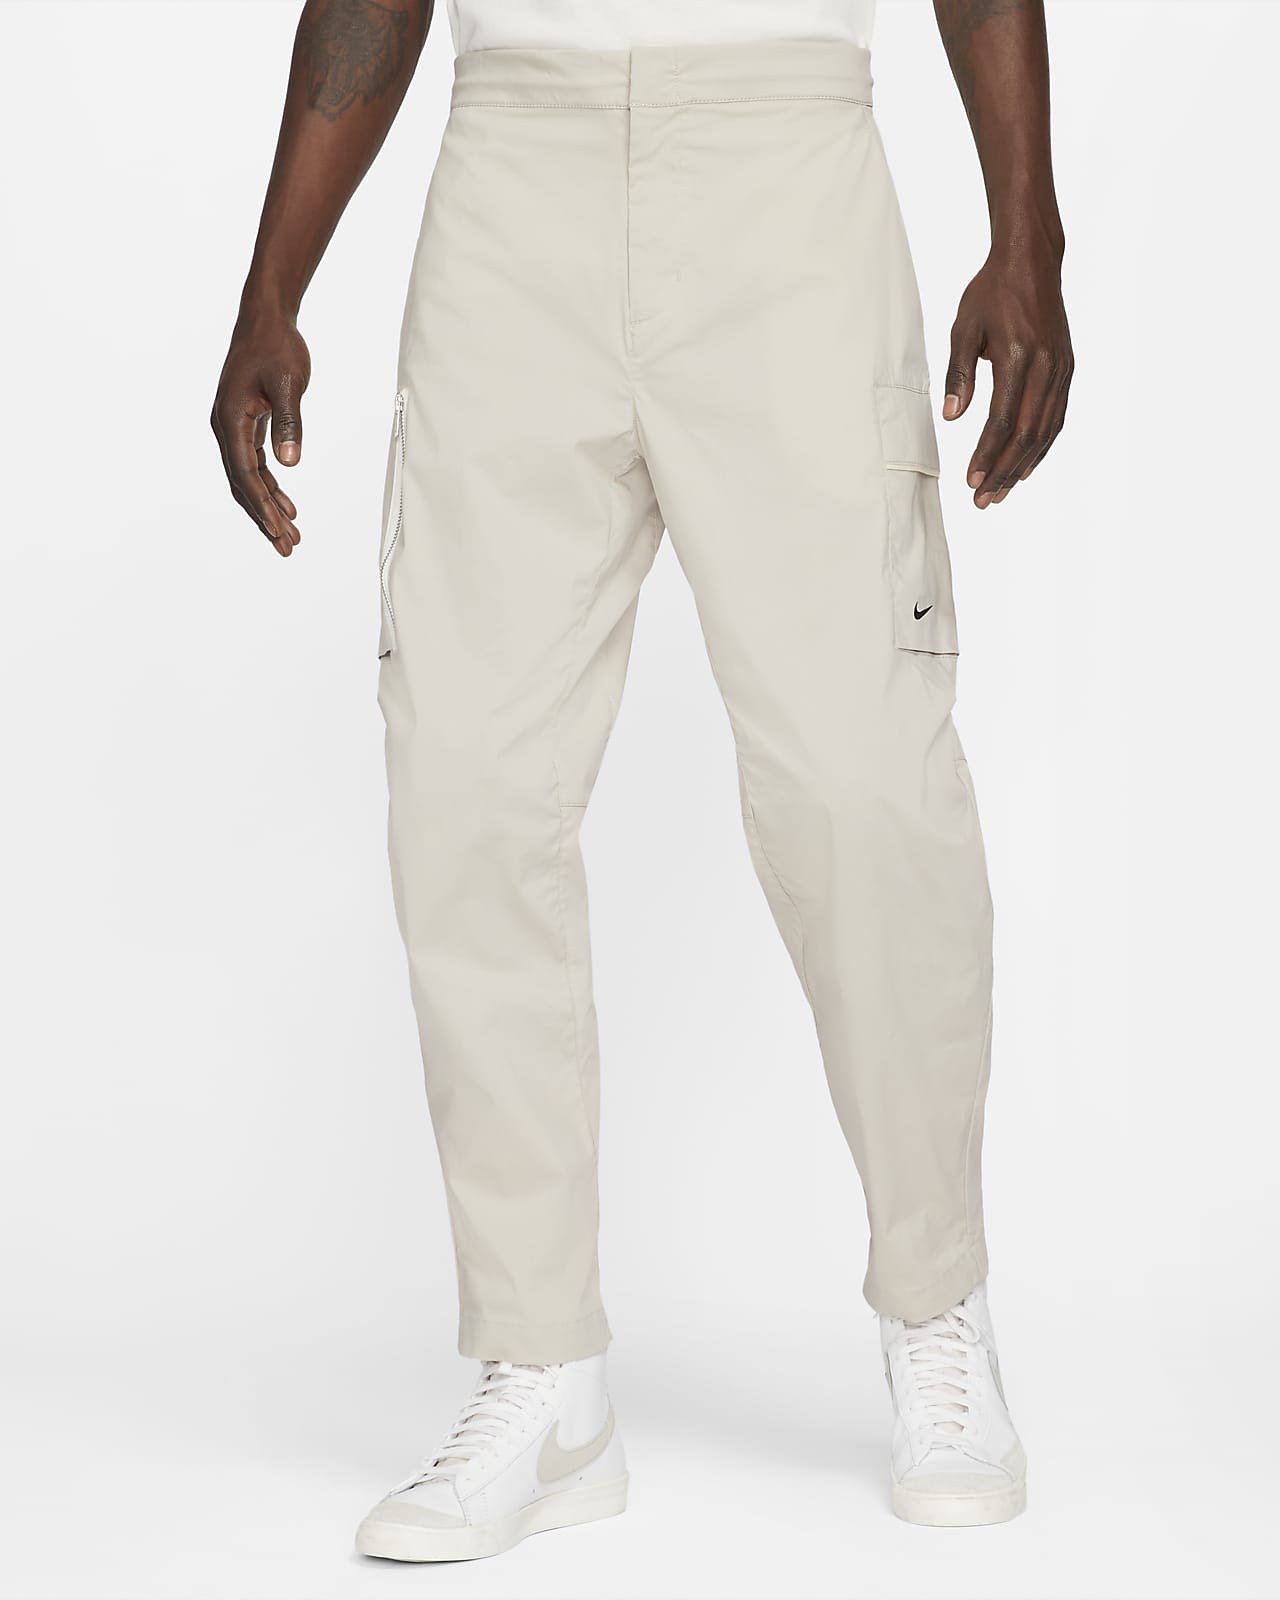 Buy Krystle Men  Boys Grey Dori Style Relaxed Fit Cotton Cargo Jogger  Jeans Pants Grey 30 at Amazonin